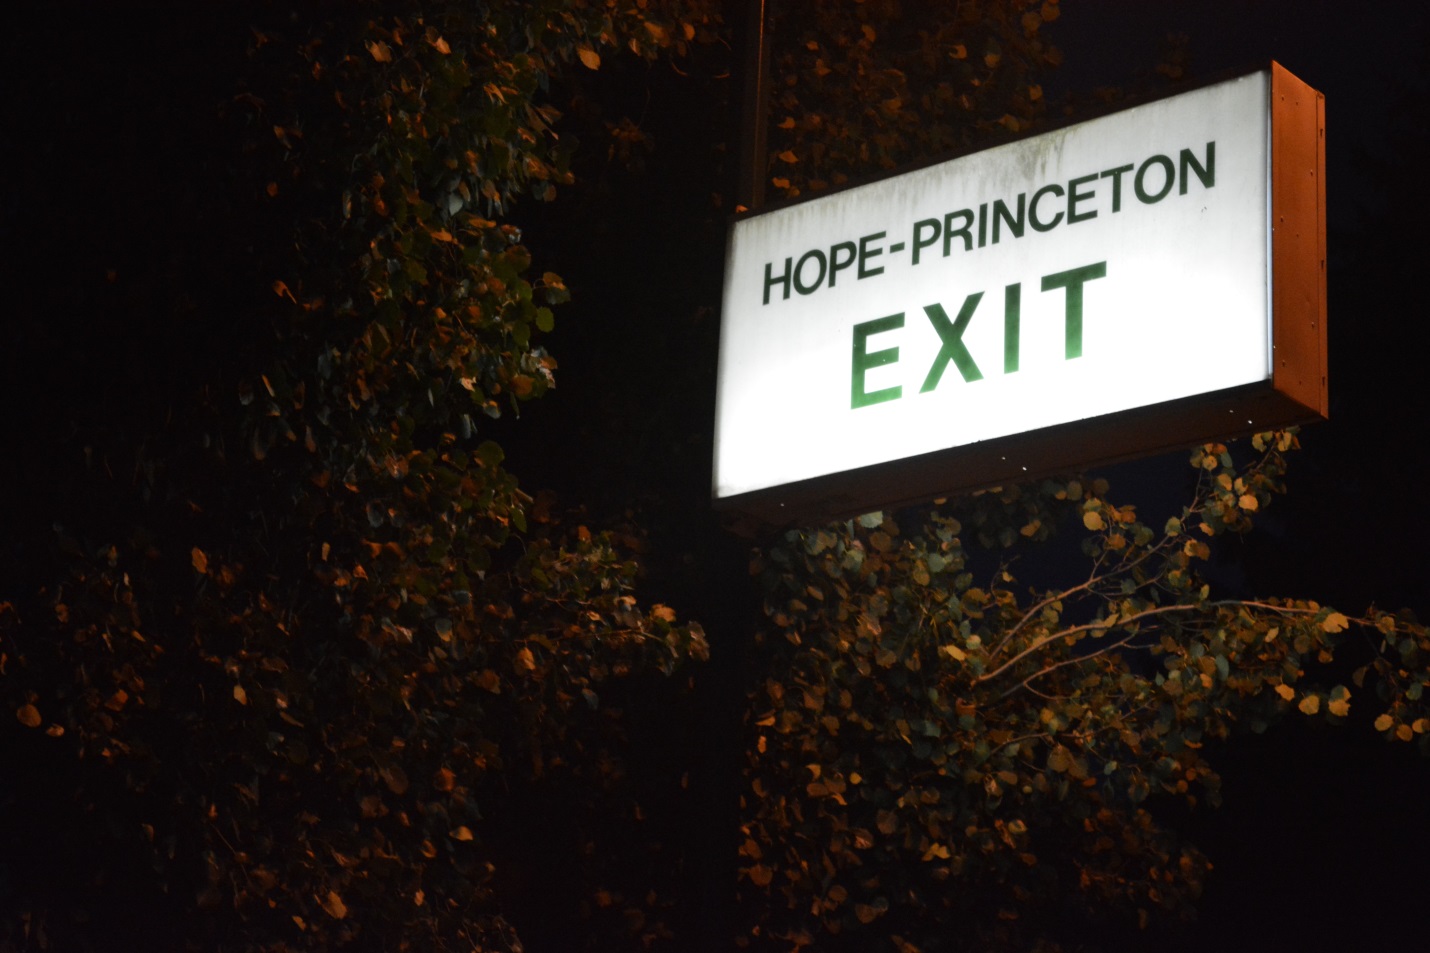 Hope Princeton exit sign